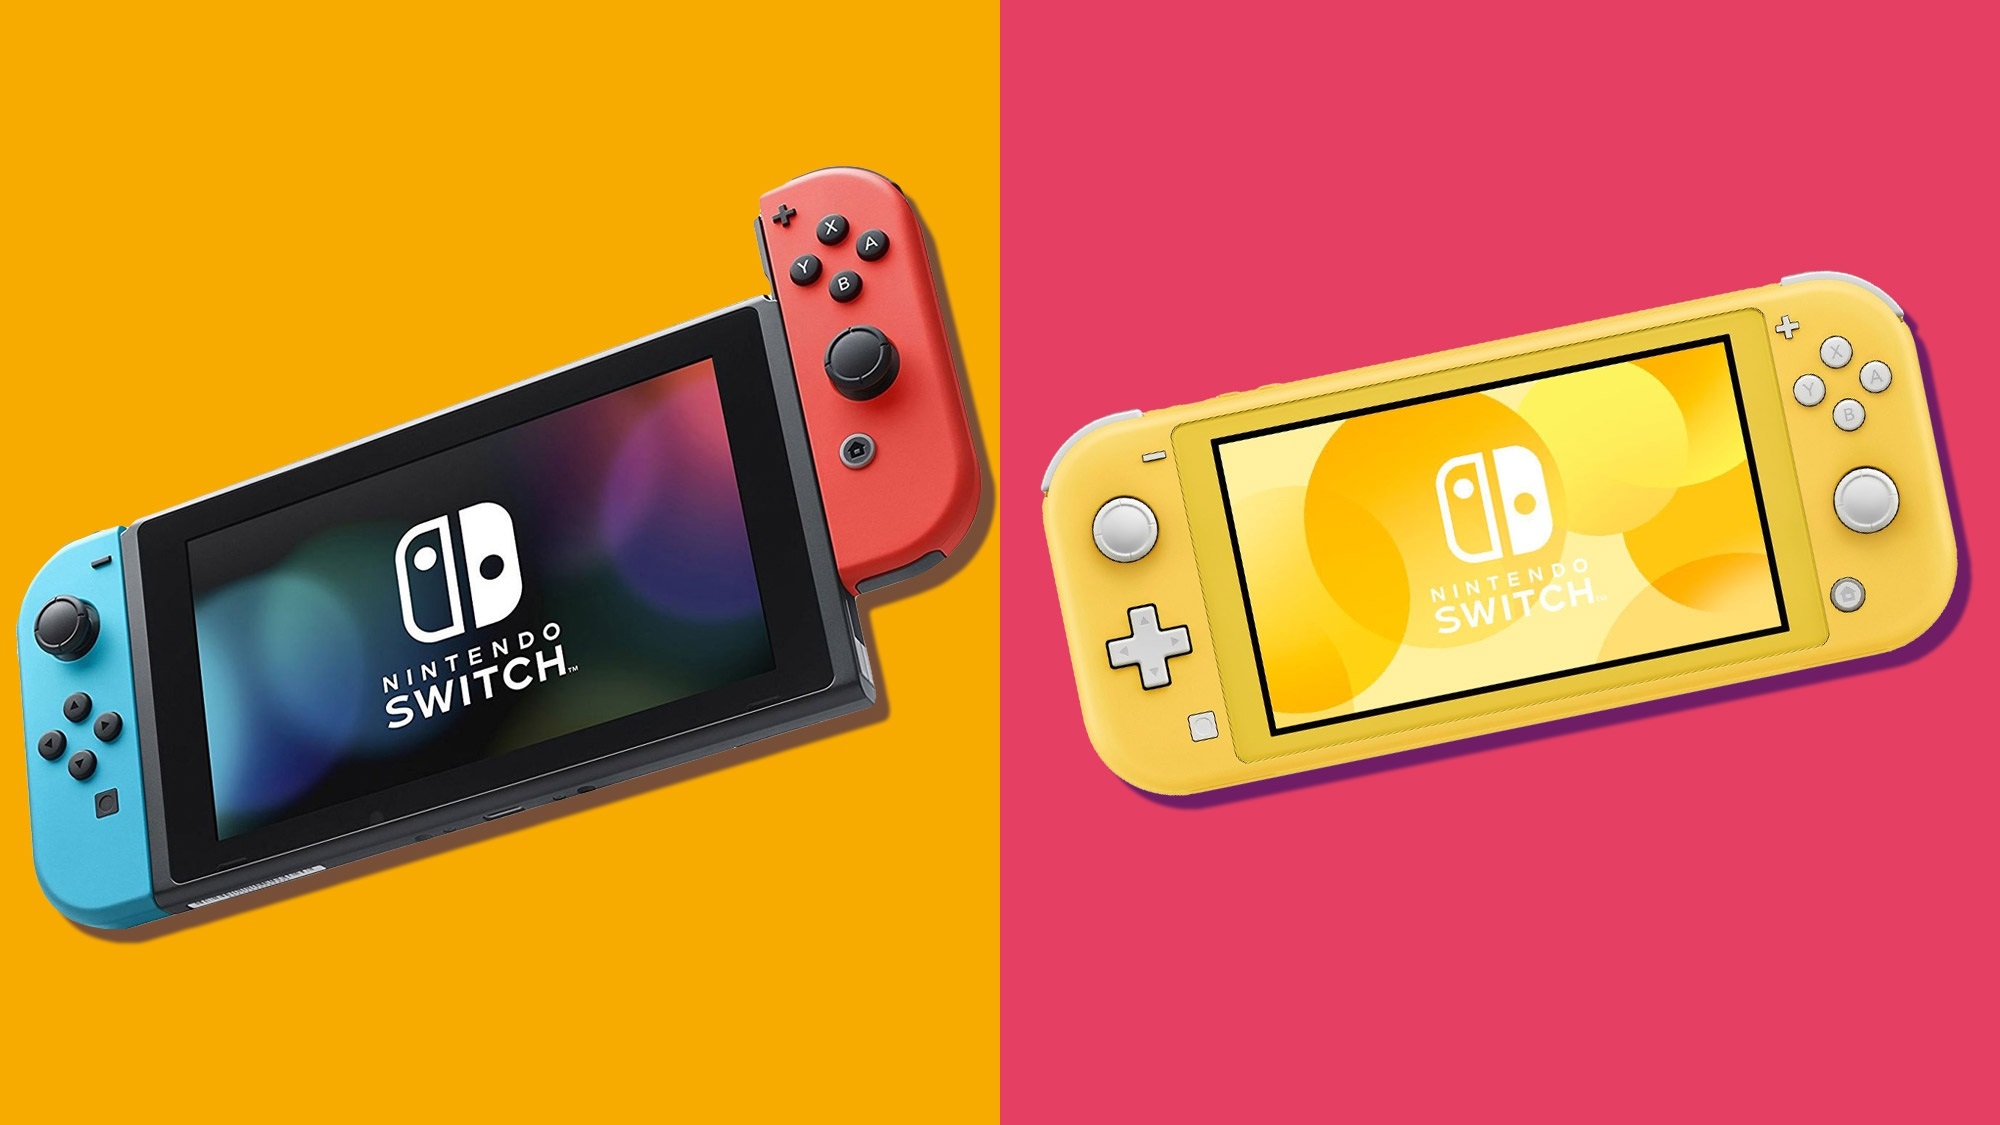 Nintendo switch v. Нинтендо свитч Лайт. Nintendo Switch и Нинтендо Лайт. Nintendo Switch Lite 2020. Nintendo Switch Lite vs Nintendo Switch.